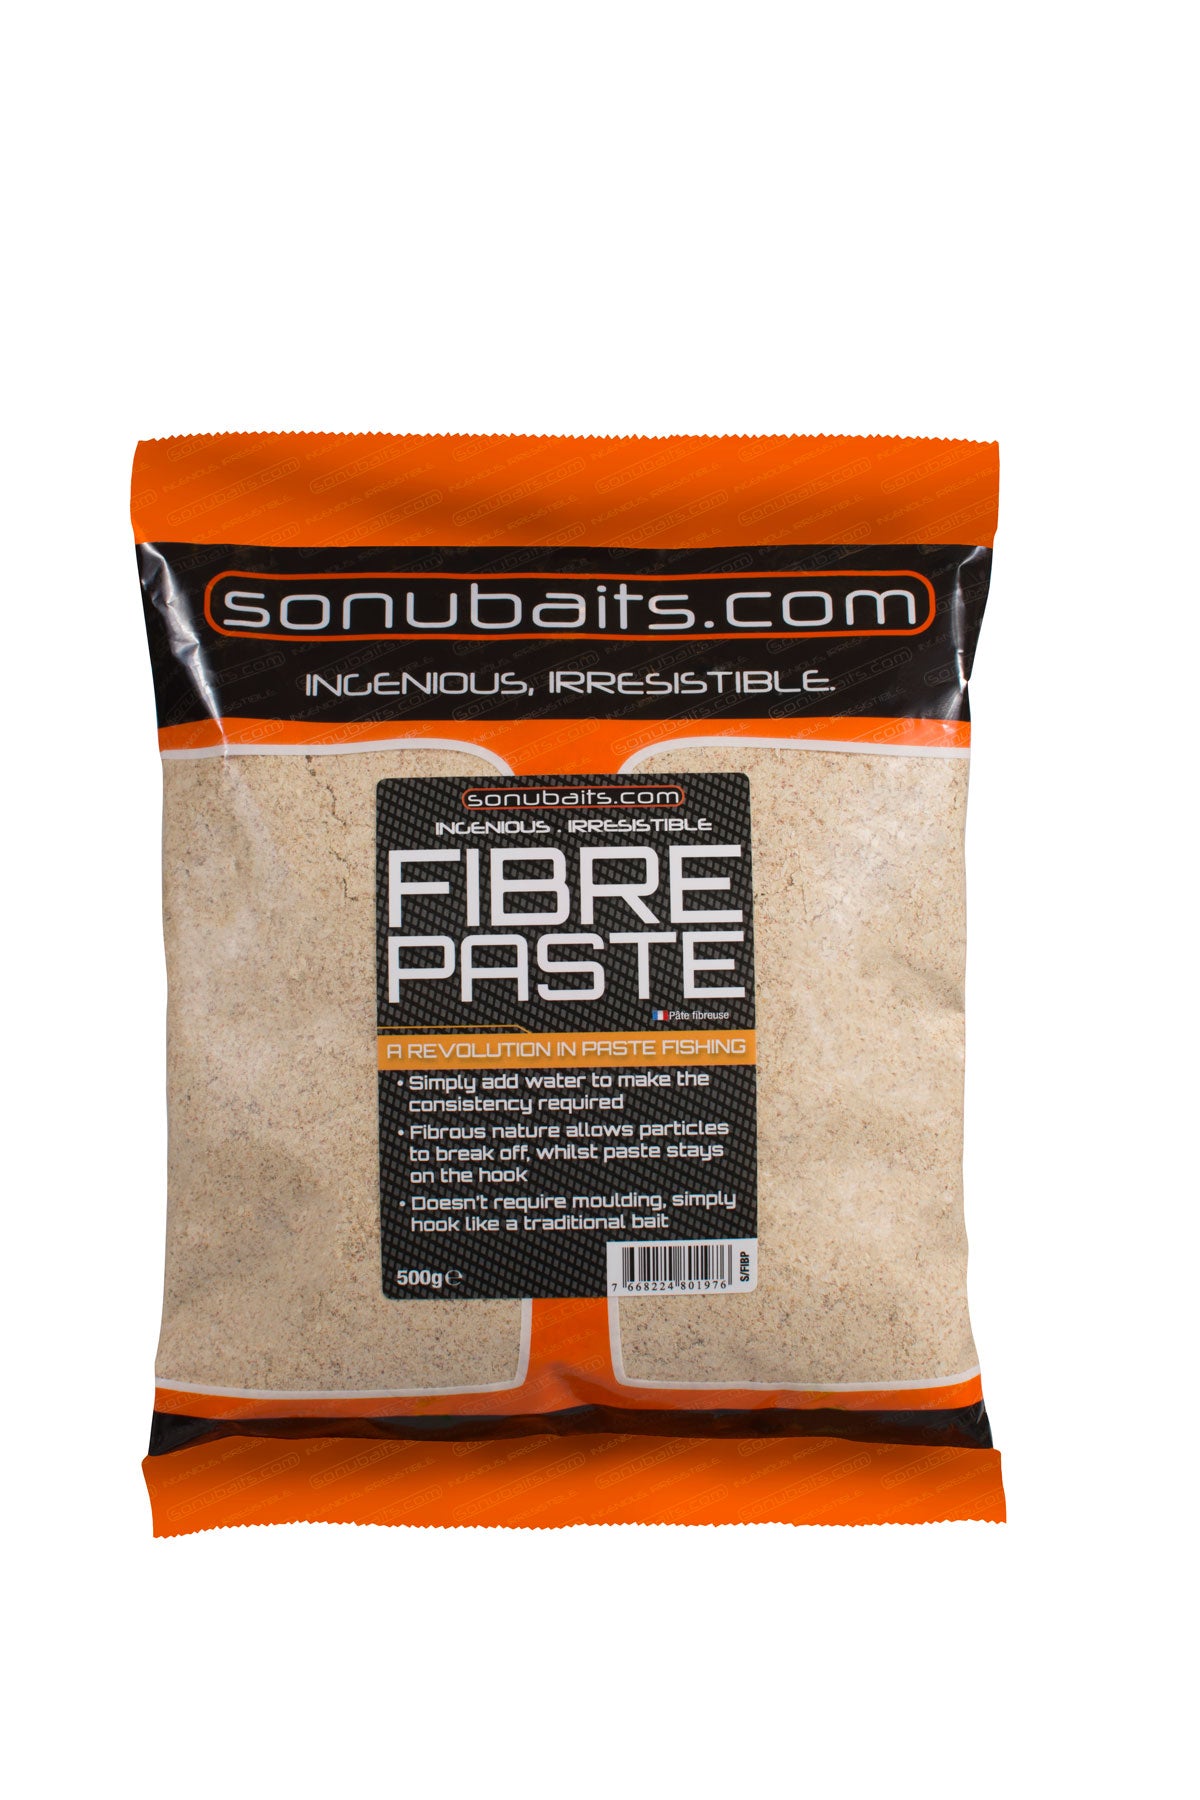 Sonubaits Fibre Paste